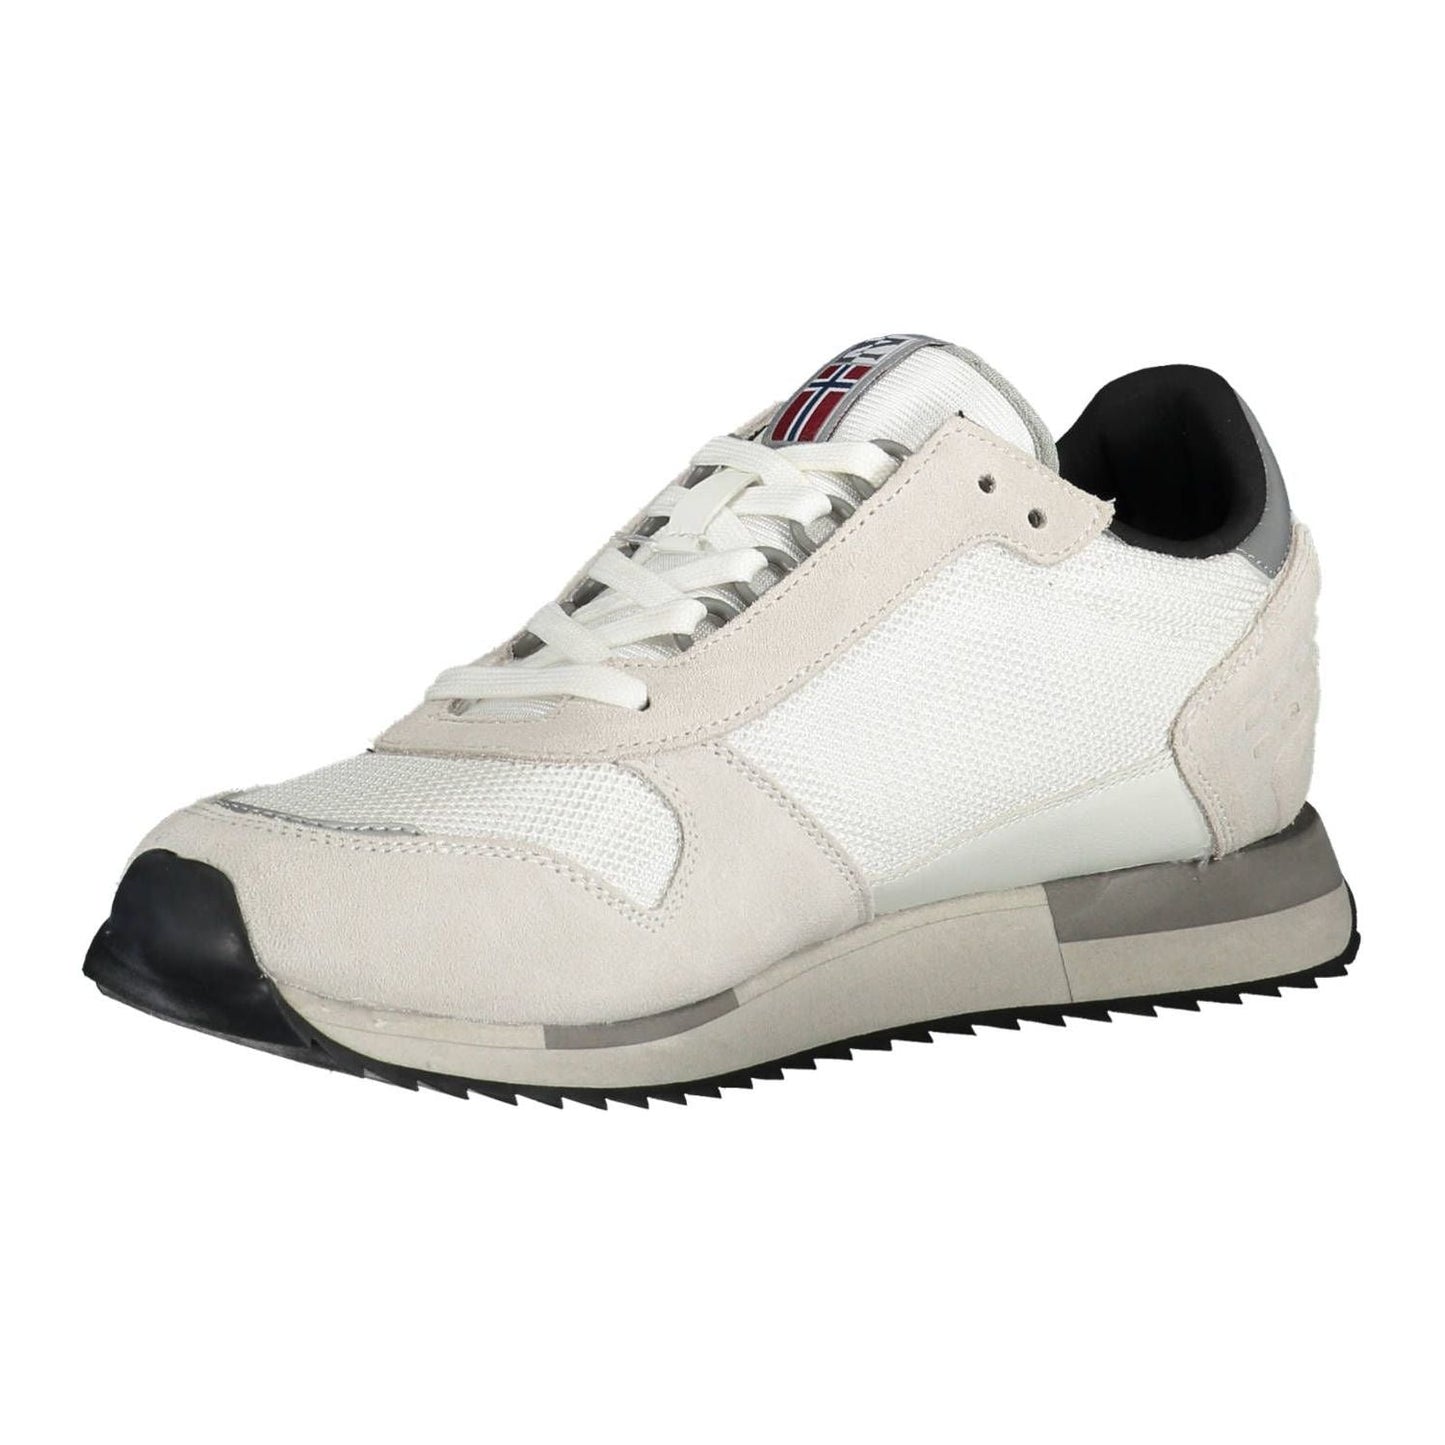 Napapijri Sleek White Sneakers with Contrasting Accents sleek-white-sneakers-with-contrasting-accents